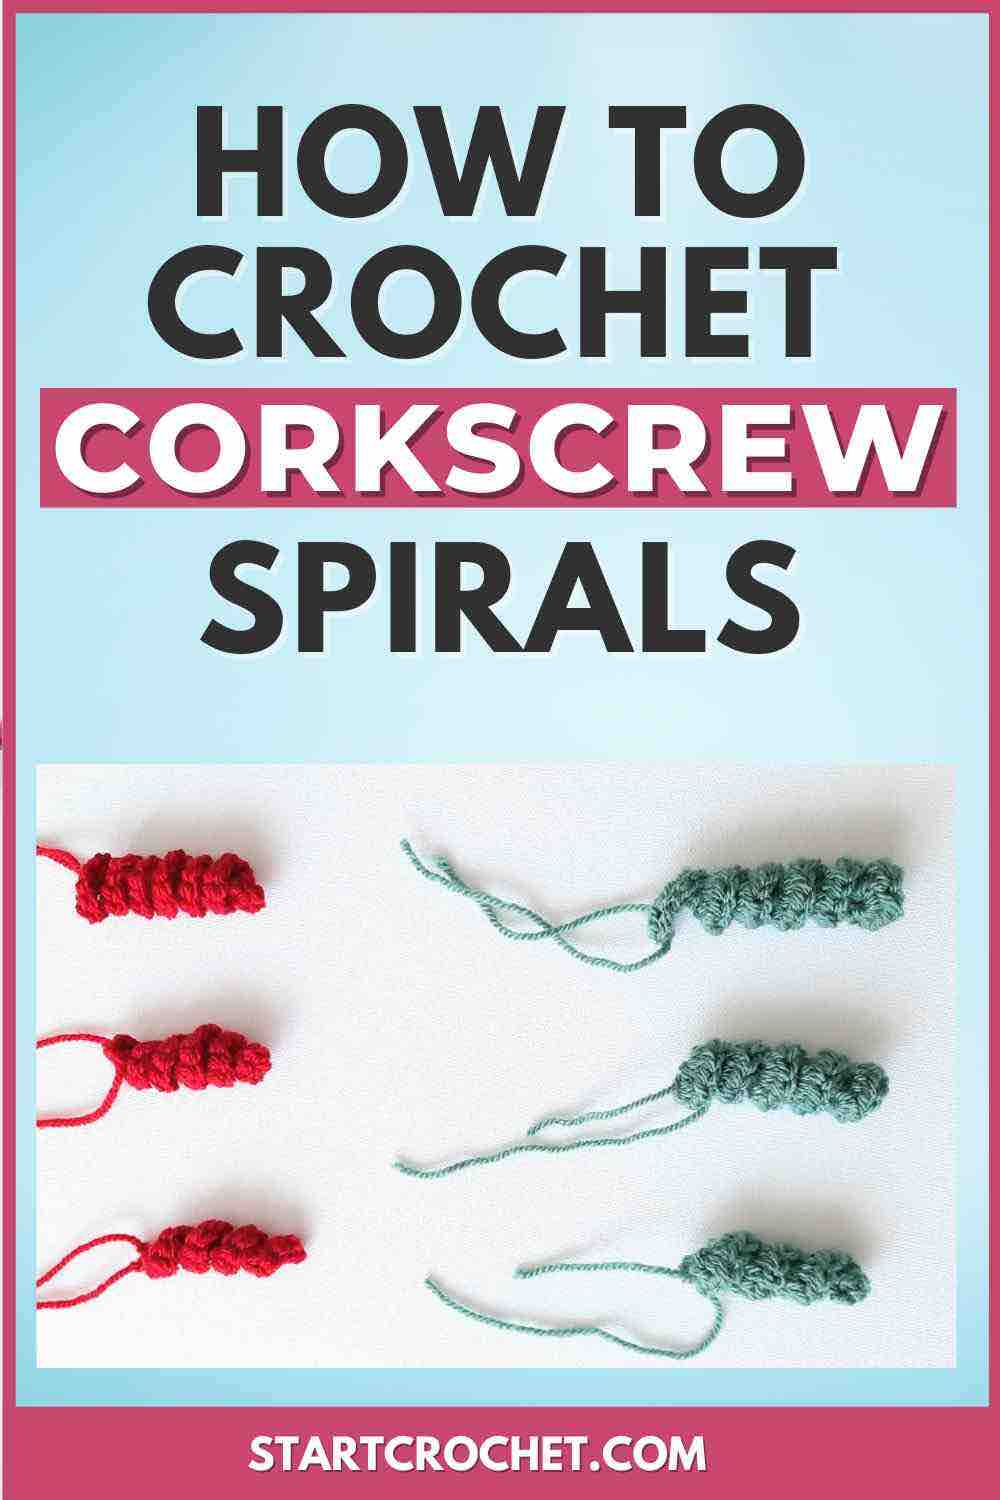 How-to-crochet-corkscrew-spirals-for-beginners